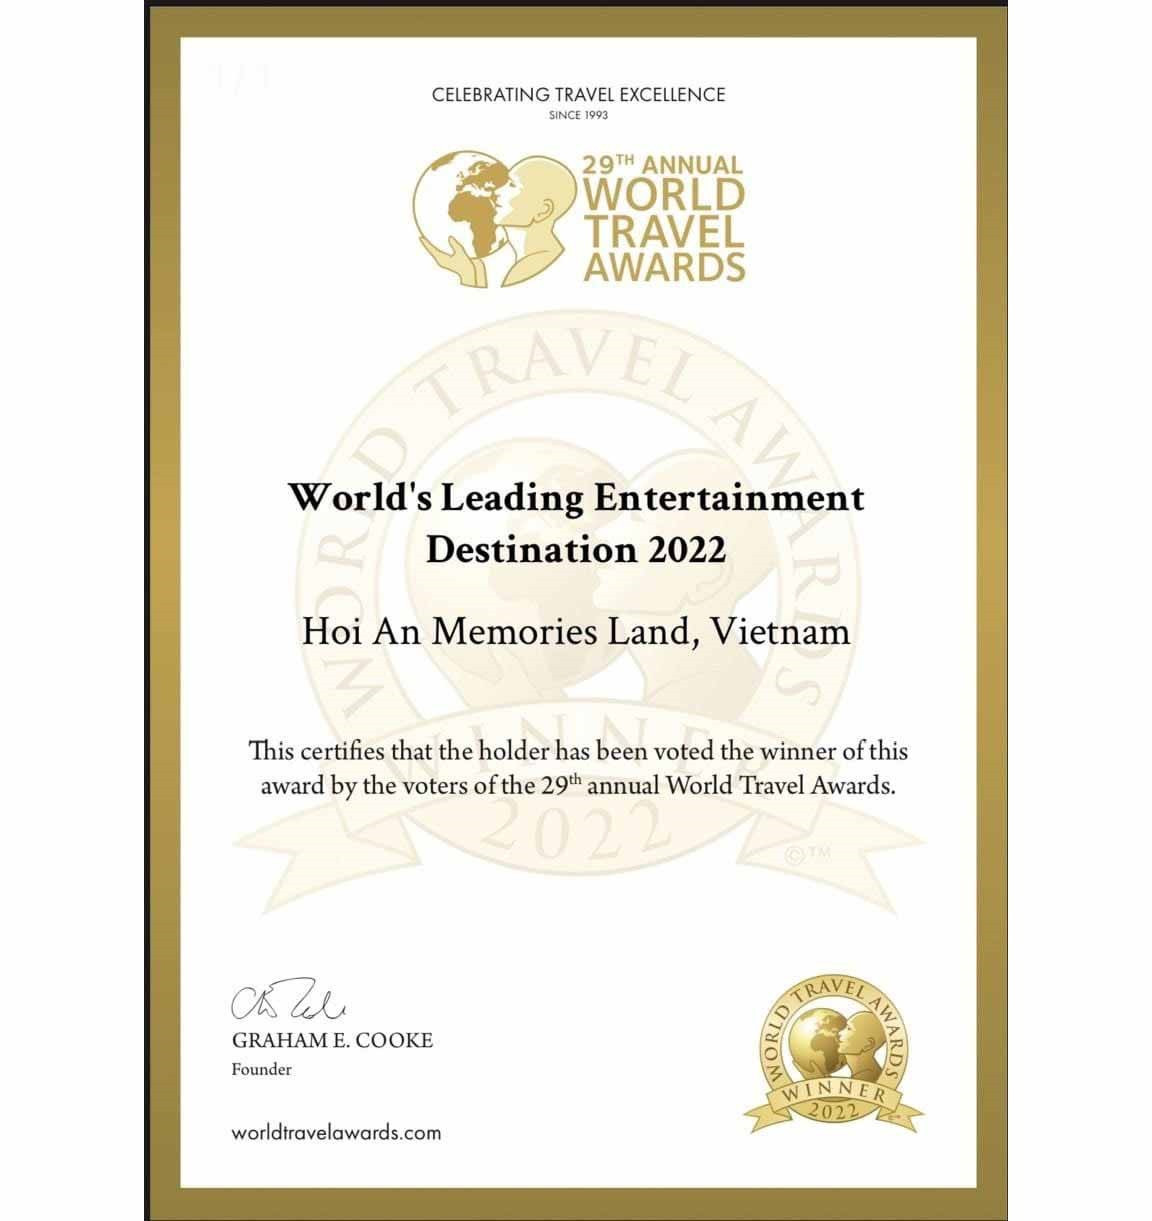 Chứng nhận giải thưởng “Hoian Memories Land - World Leading entertaiment destination 2022”.của BTC World Travel Awards